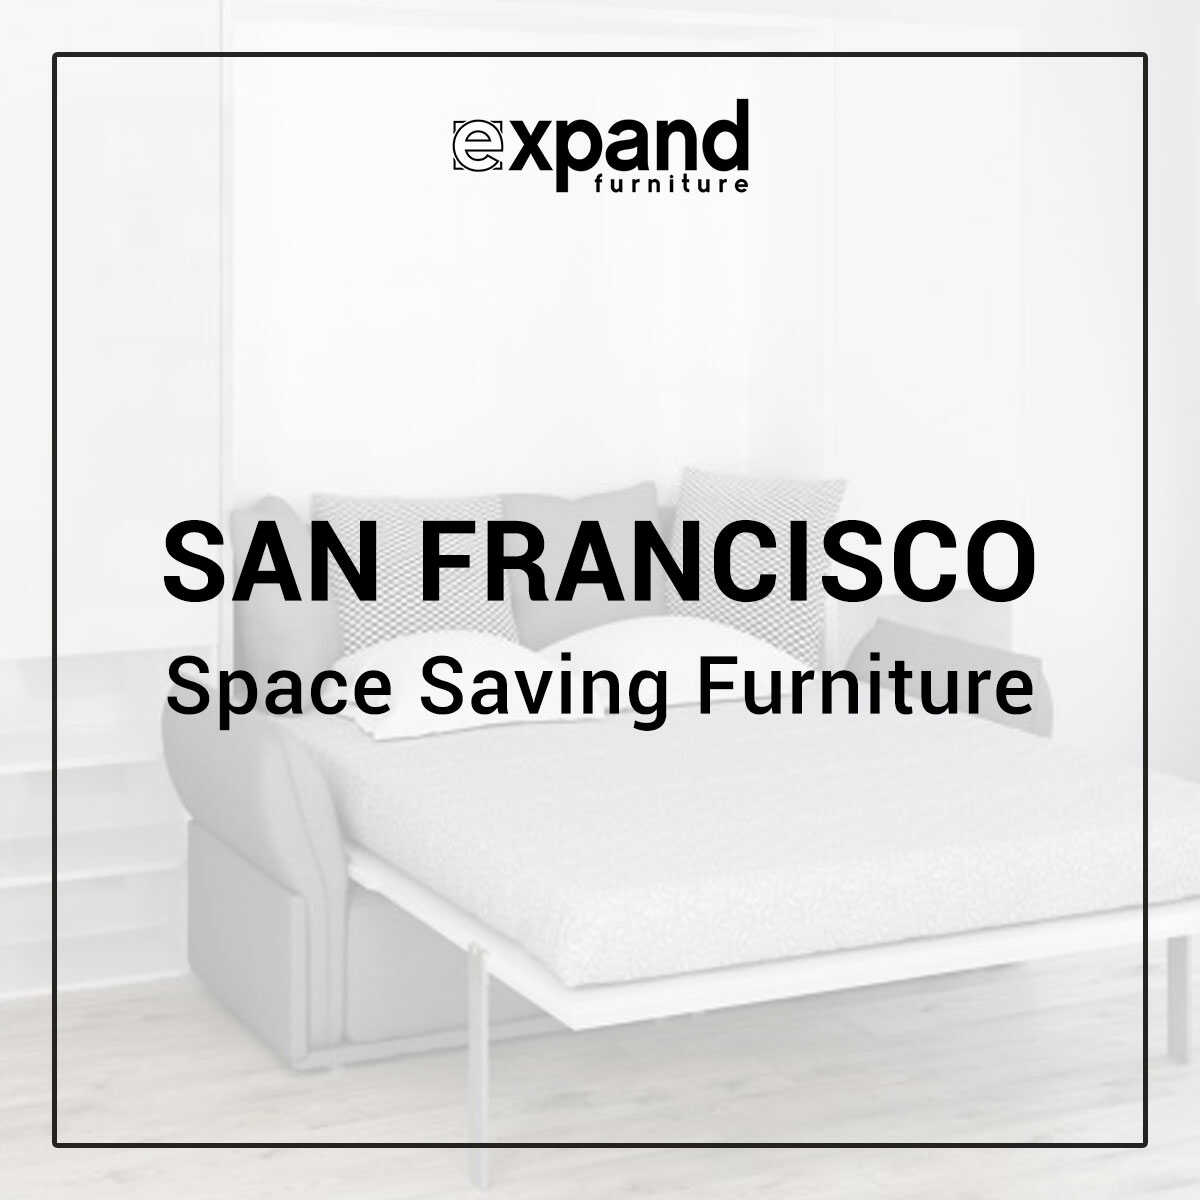 San Francisco Space Saving Furniture featured image